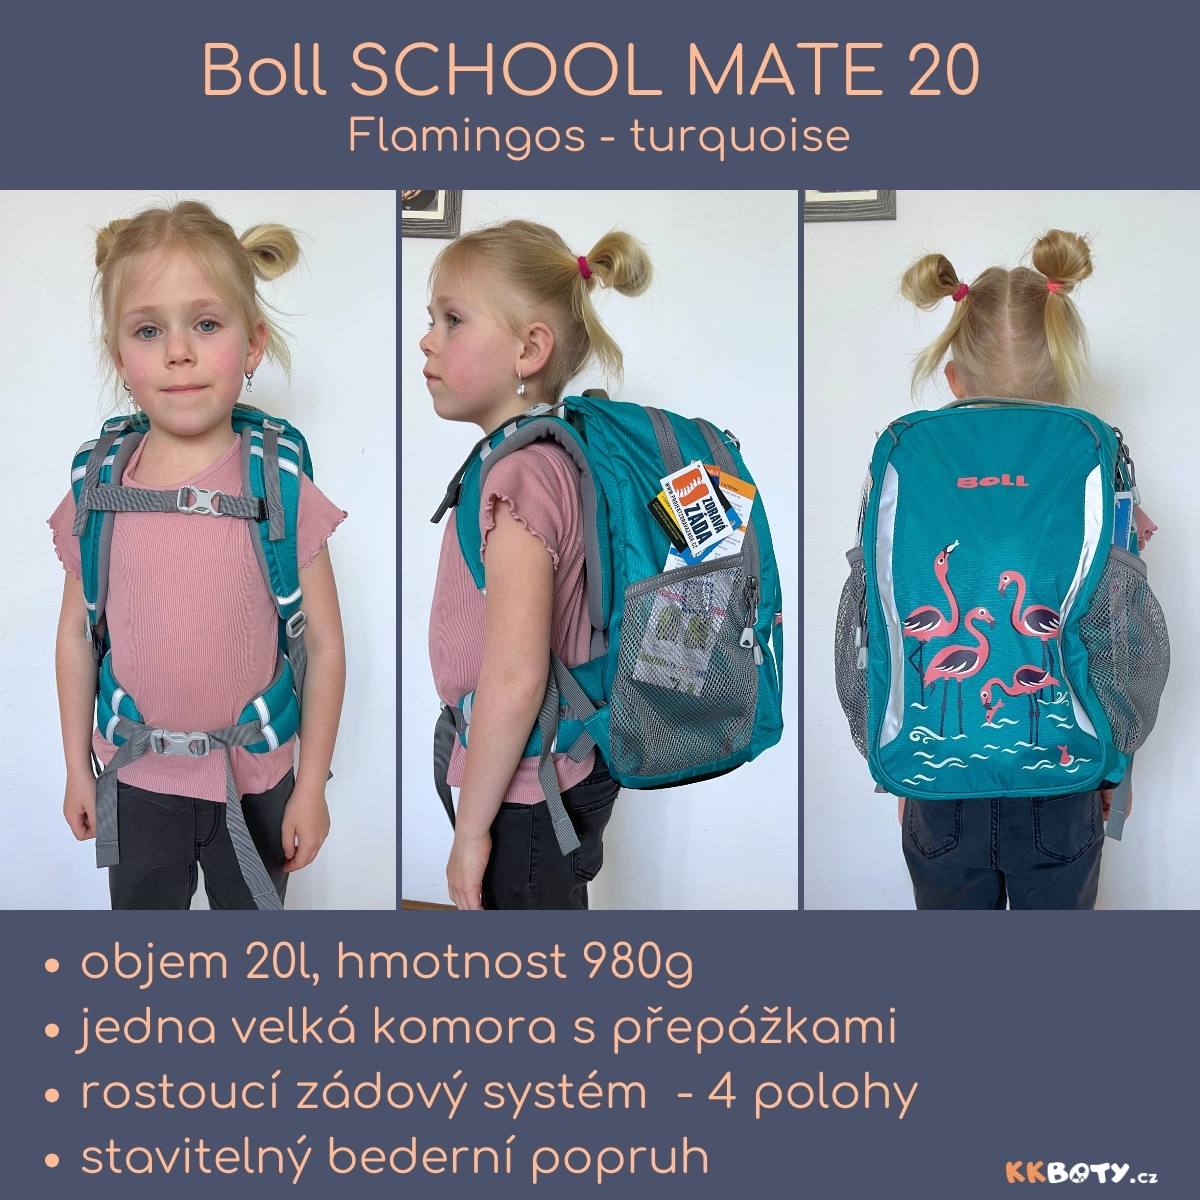 Boll SCHOOL MATE 20 Flamingos - turquoise